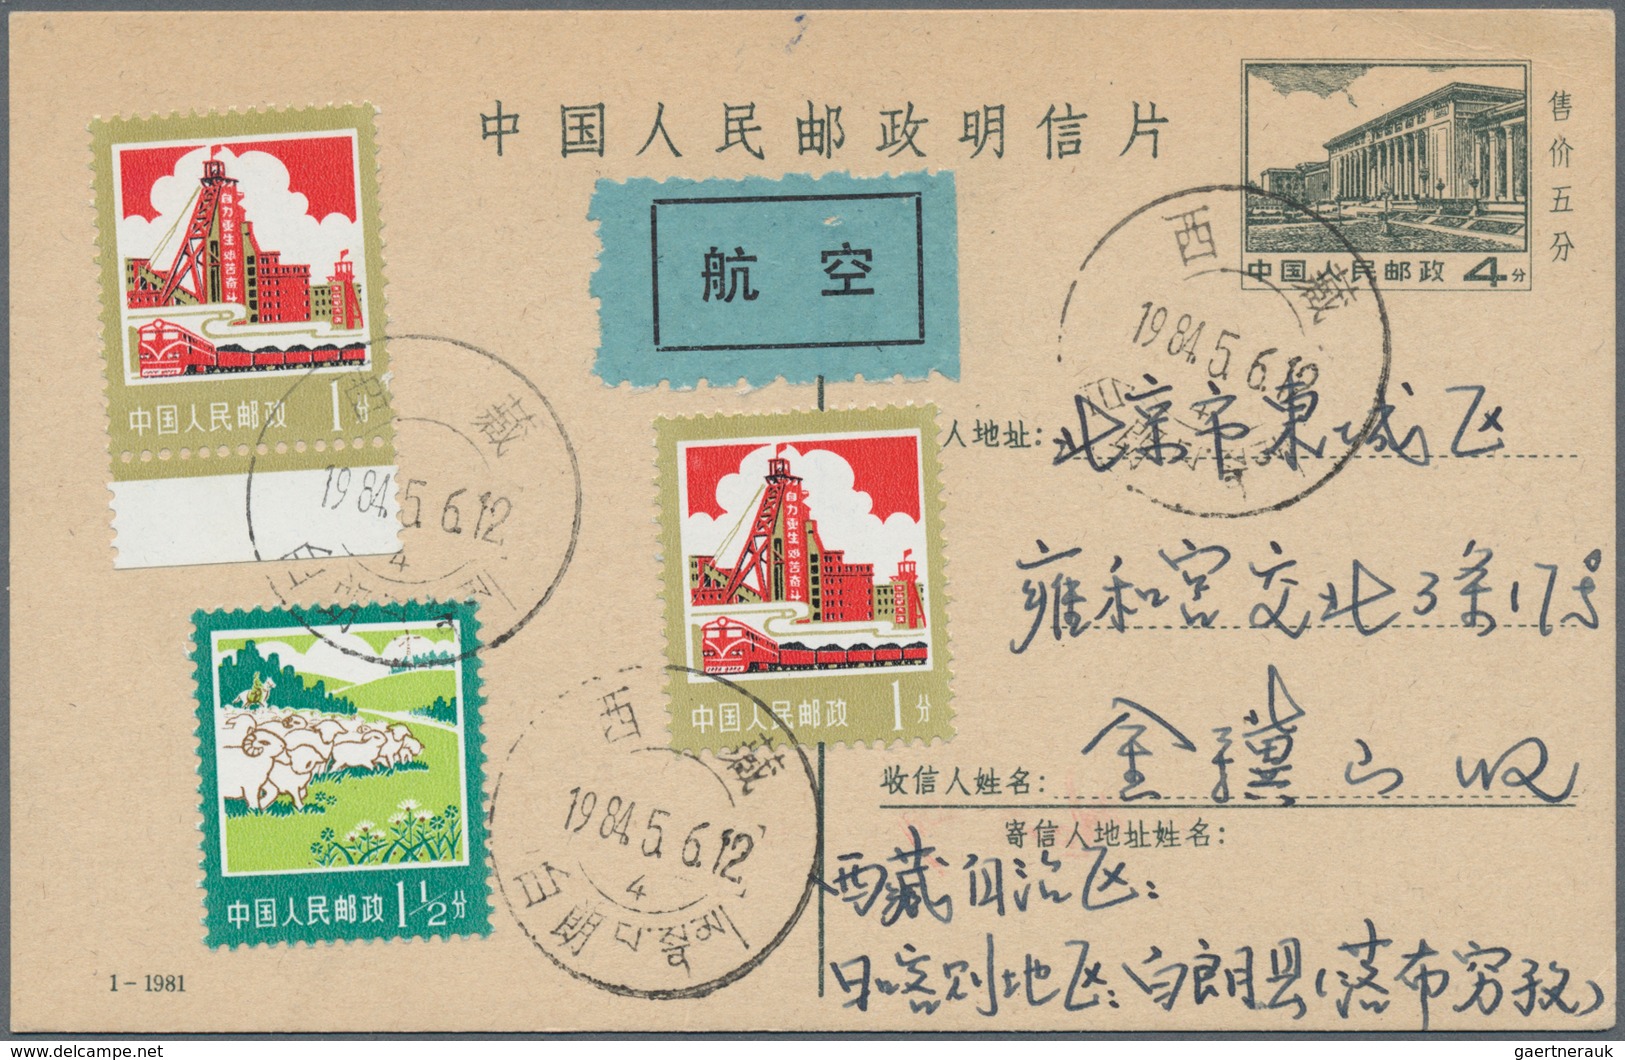 China - Volksrepublik - Ganzsachen: 1977/81, Used In Tibet, To Peking: Card 2 F. Uprated 2 F. (7-197 - Ansichtskarten